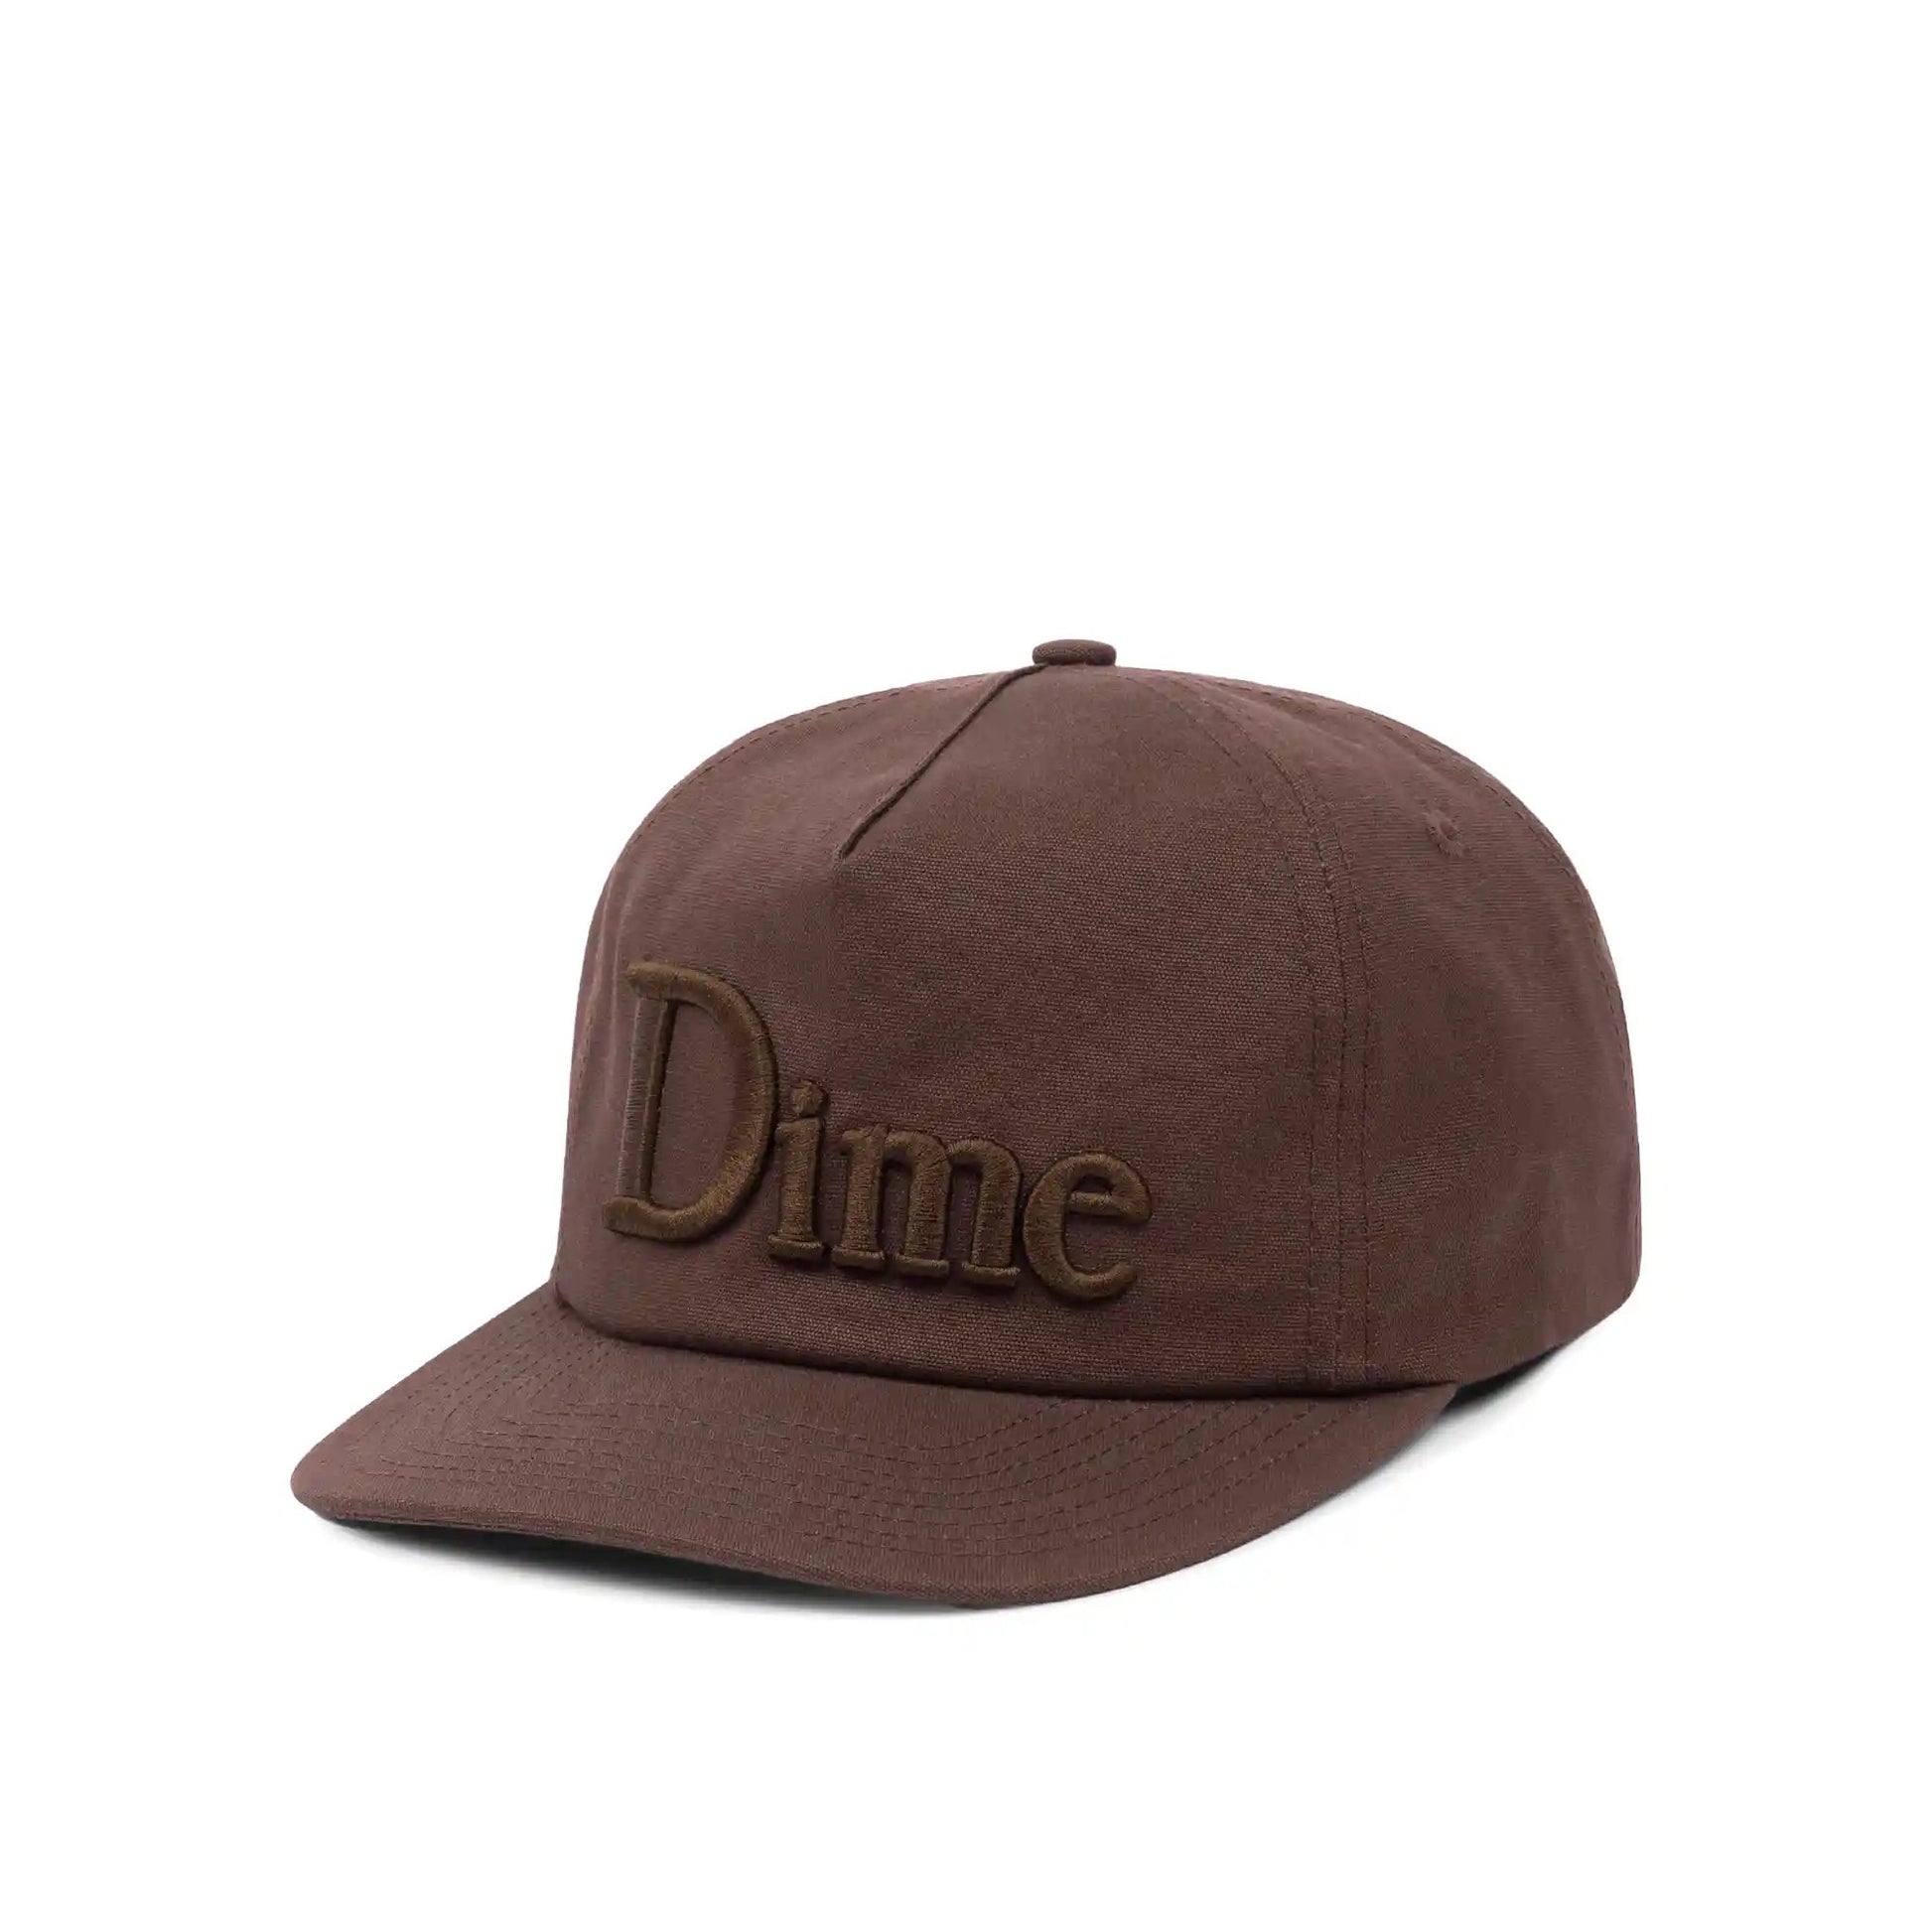 Dime Classic 3D Worker Cap, dark brown - Tiki Room Skateboards - 1